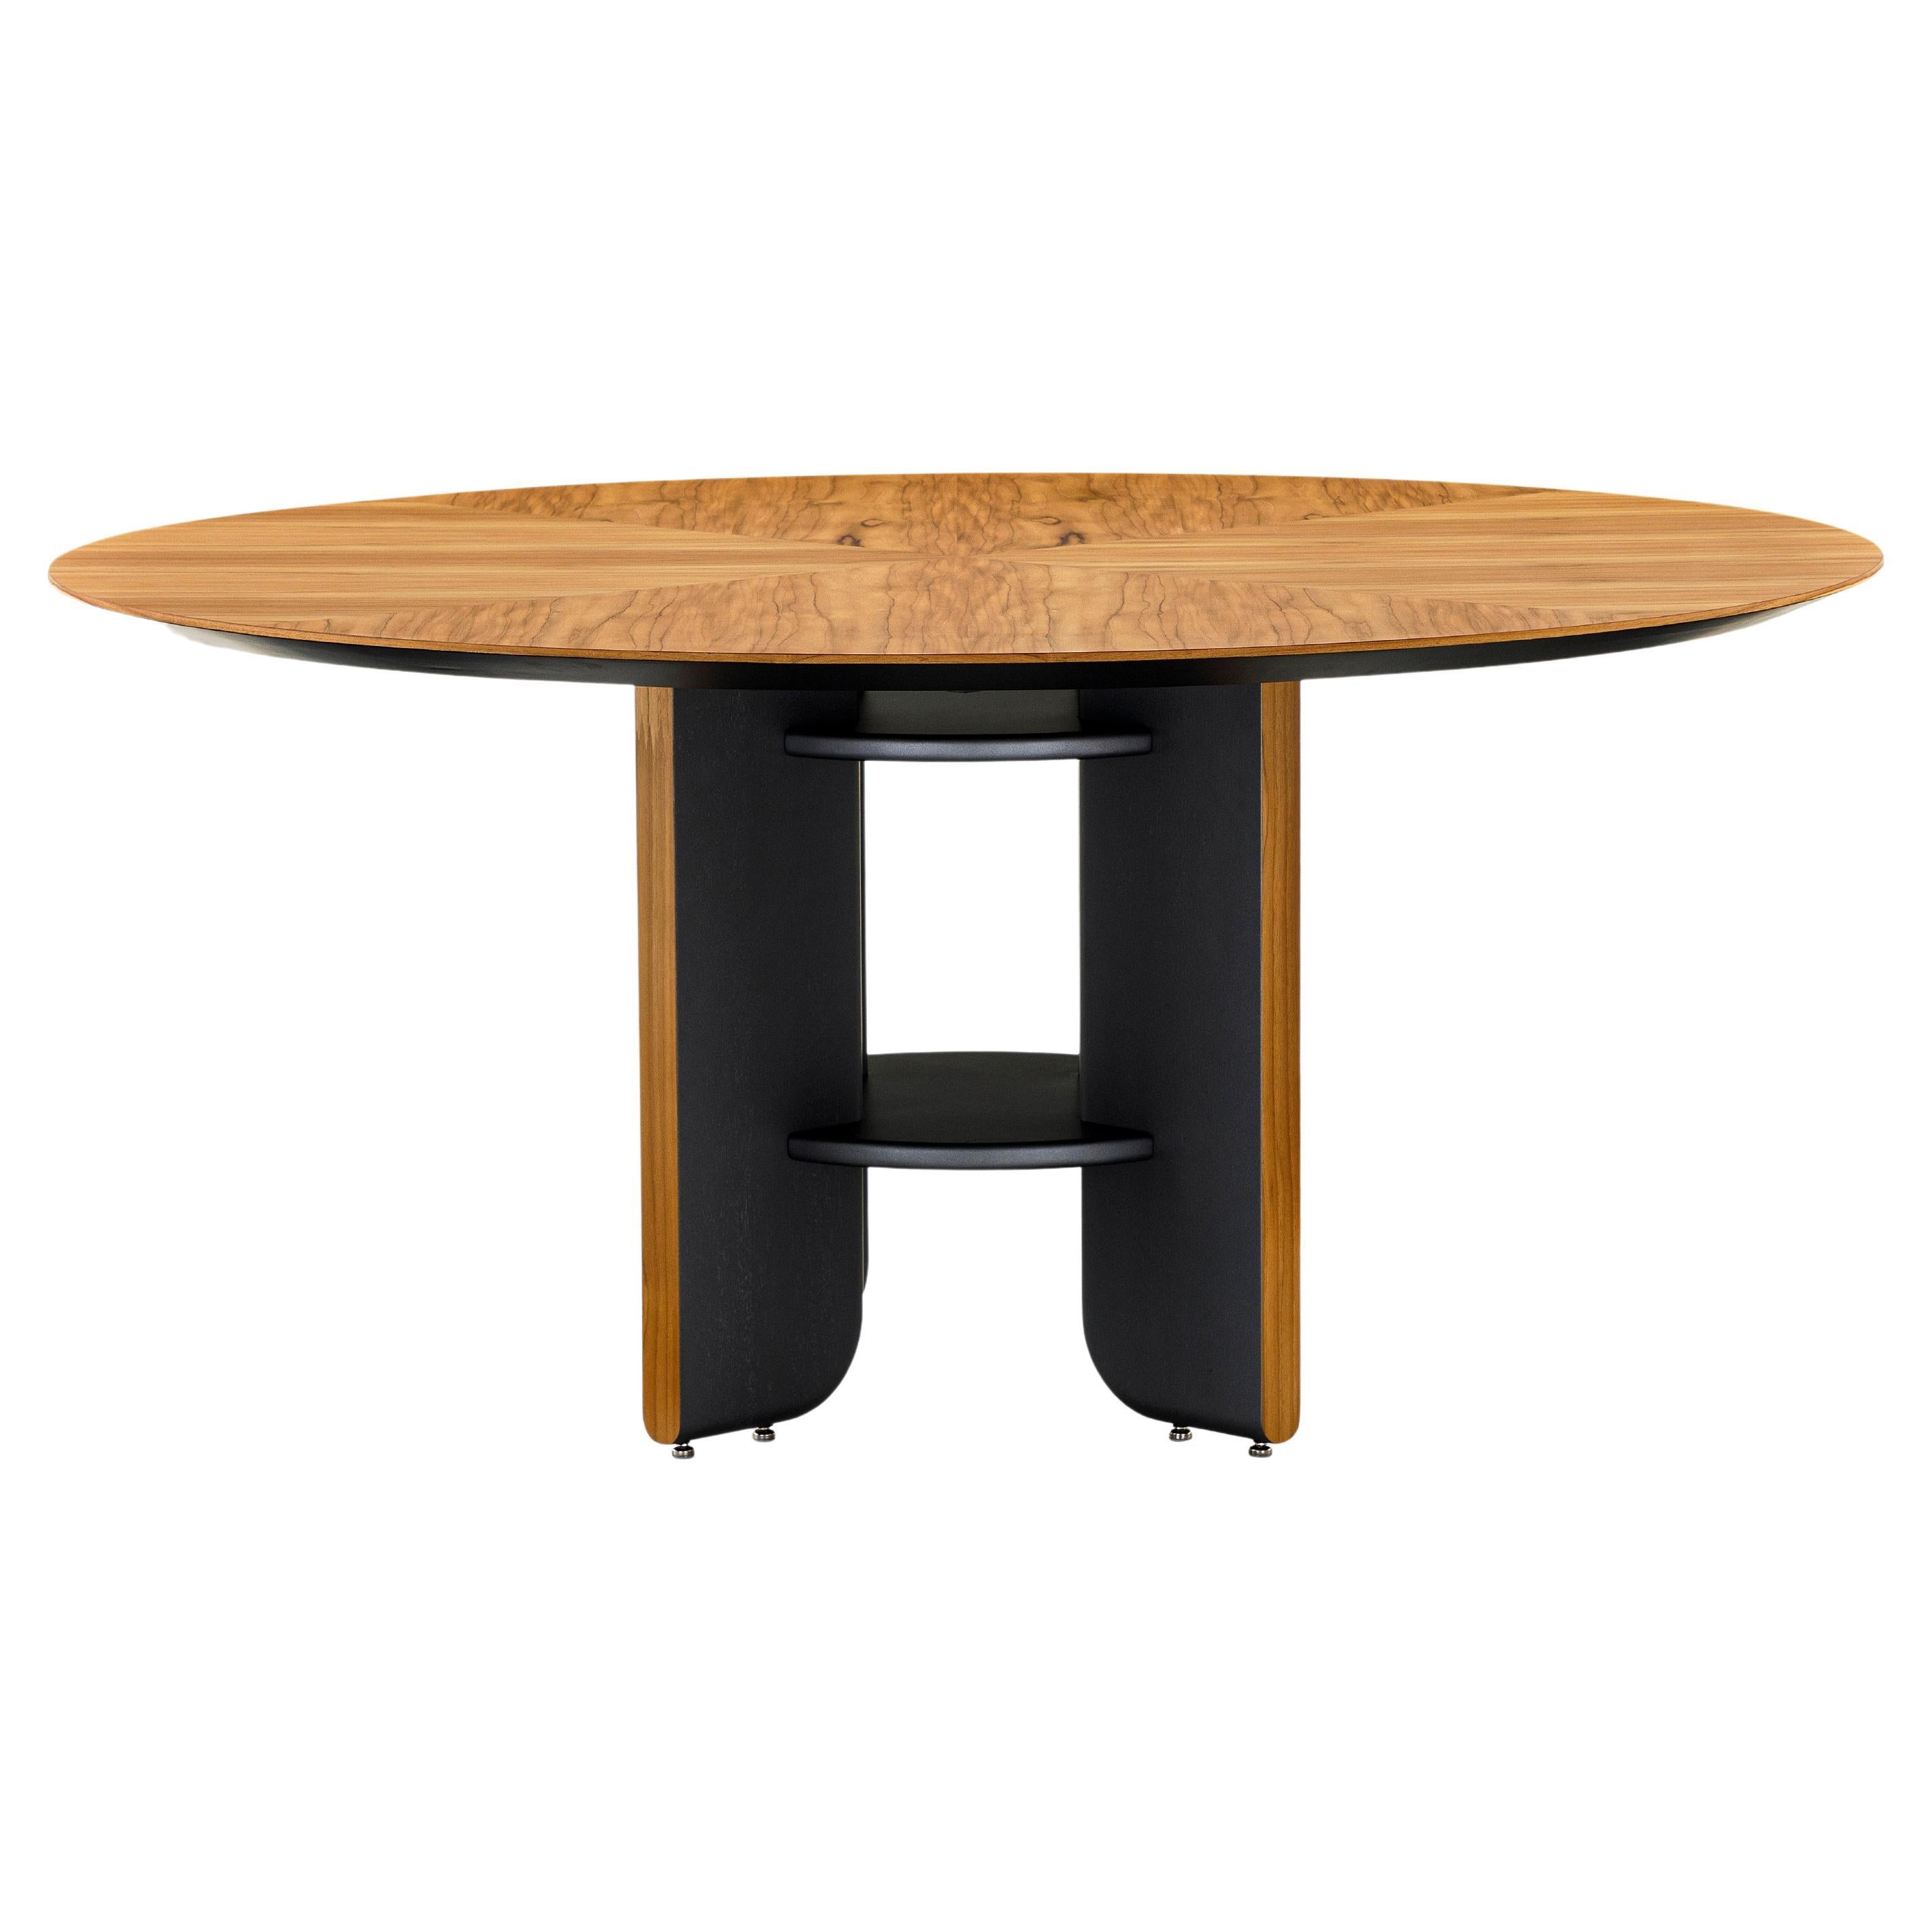 Moon Round Dining Table with Teak Veneered Top and Black Wood Legs 63''